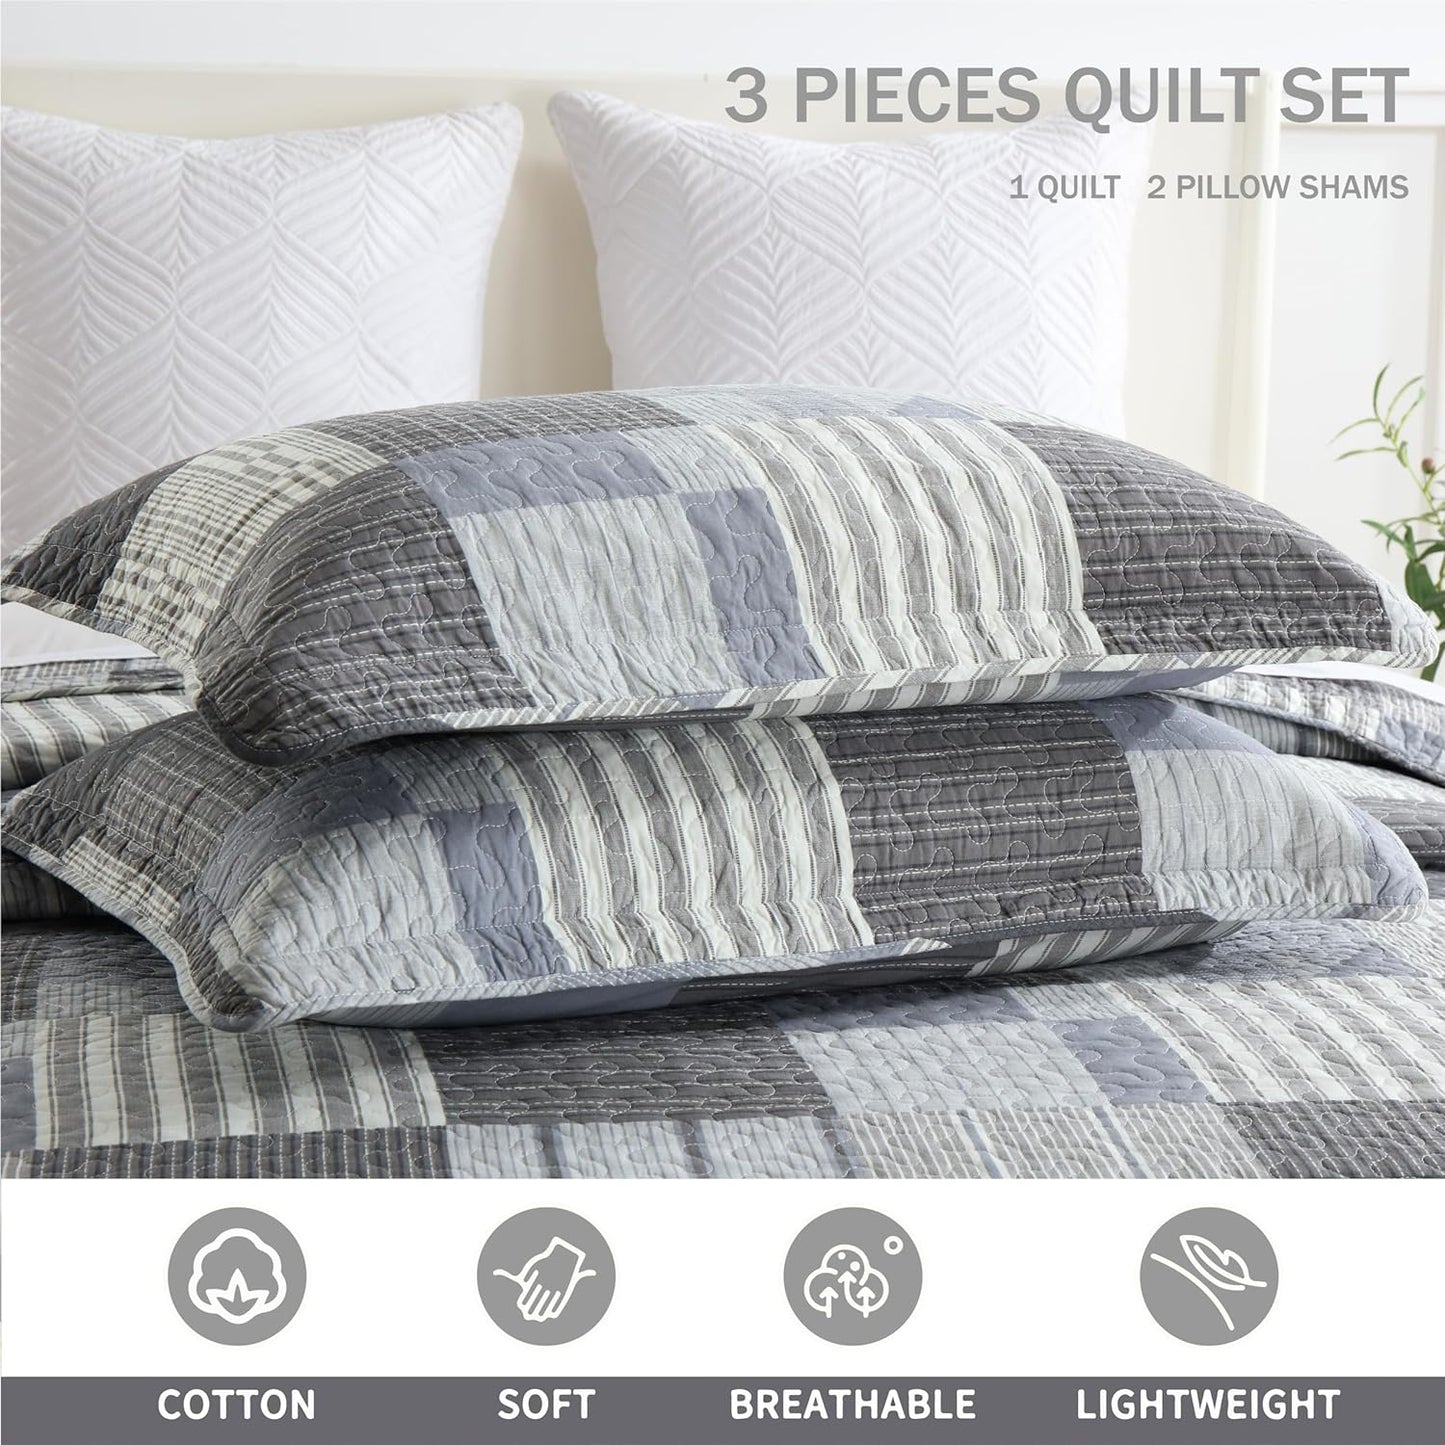 Queen Quilt Bedding Set, Grey Cotton Quilt Plaid Bedding Set, Gray Striped Quilts Queen Size,Country Quilted Bedspread Set, Lightweight Breathable Comforter Set All-Season